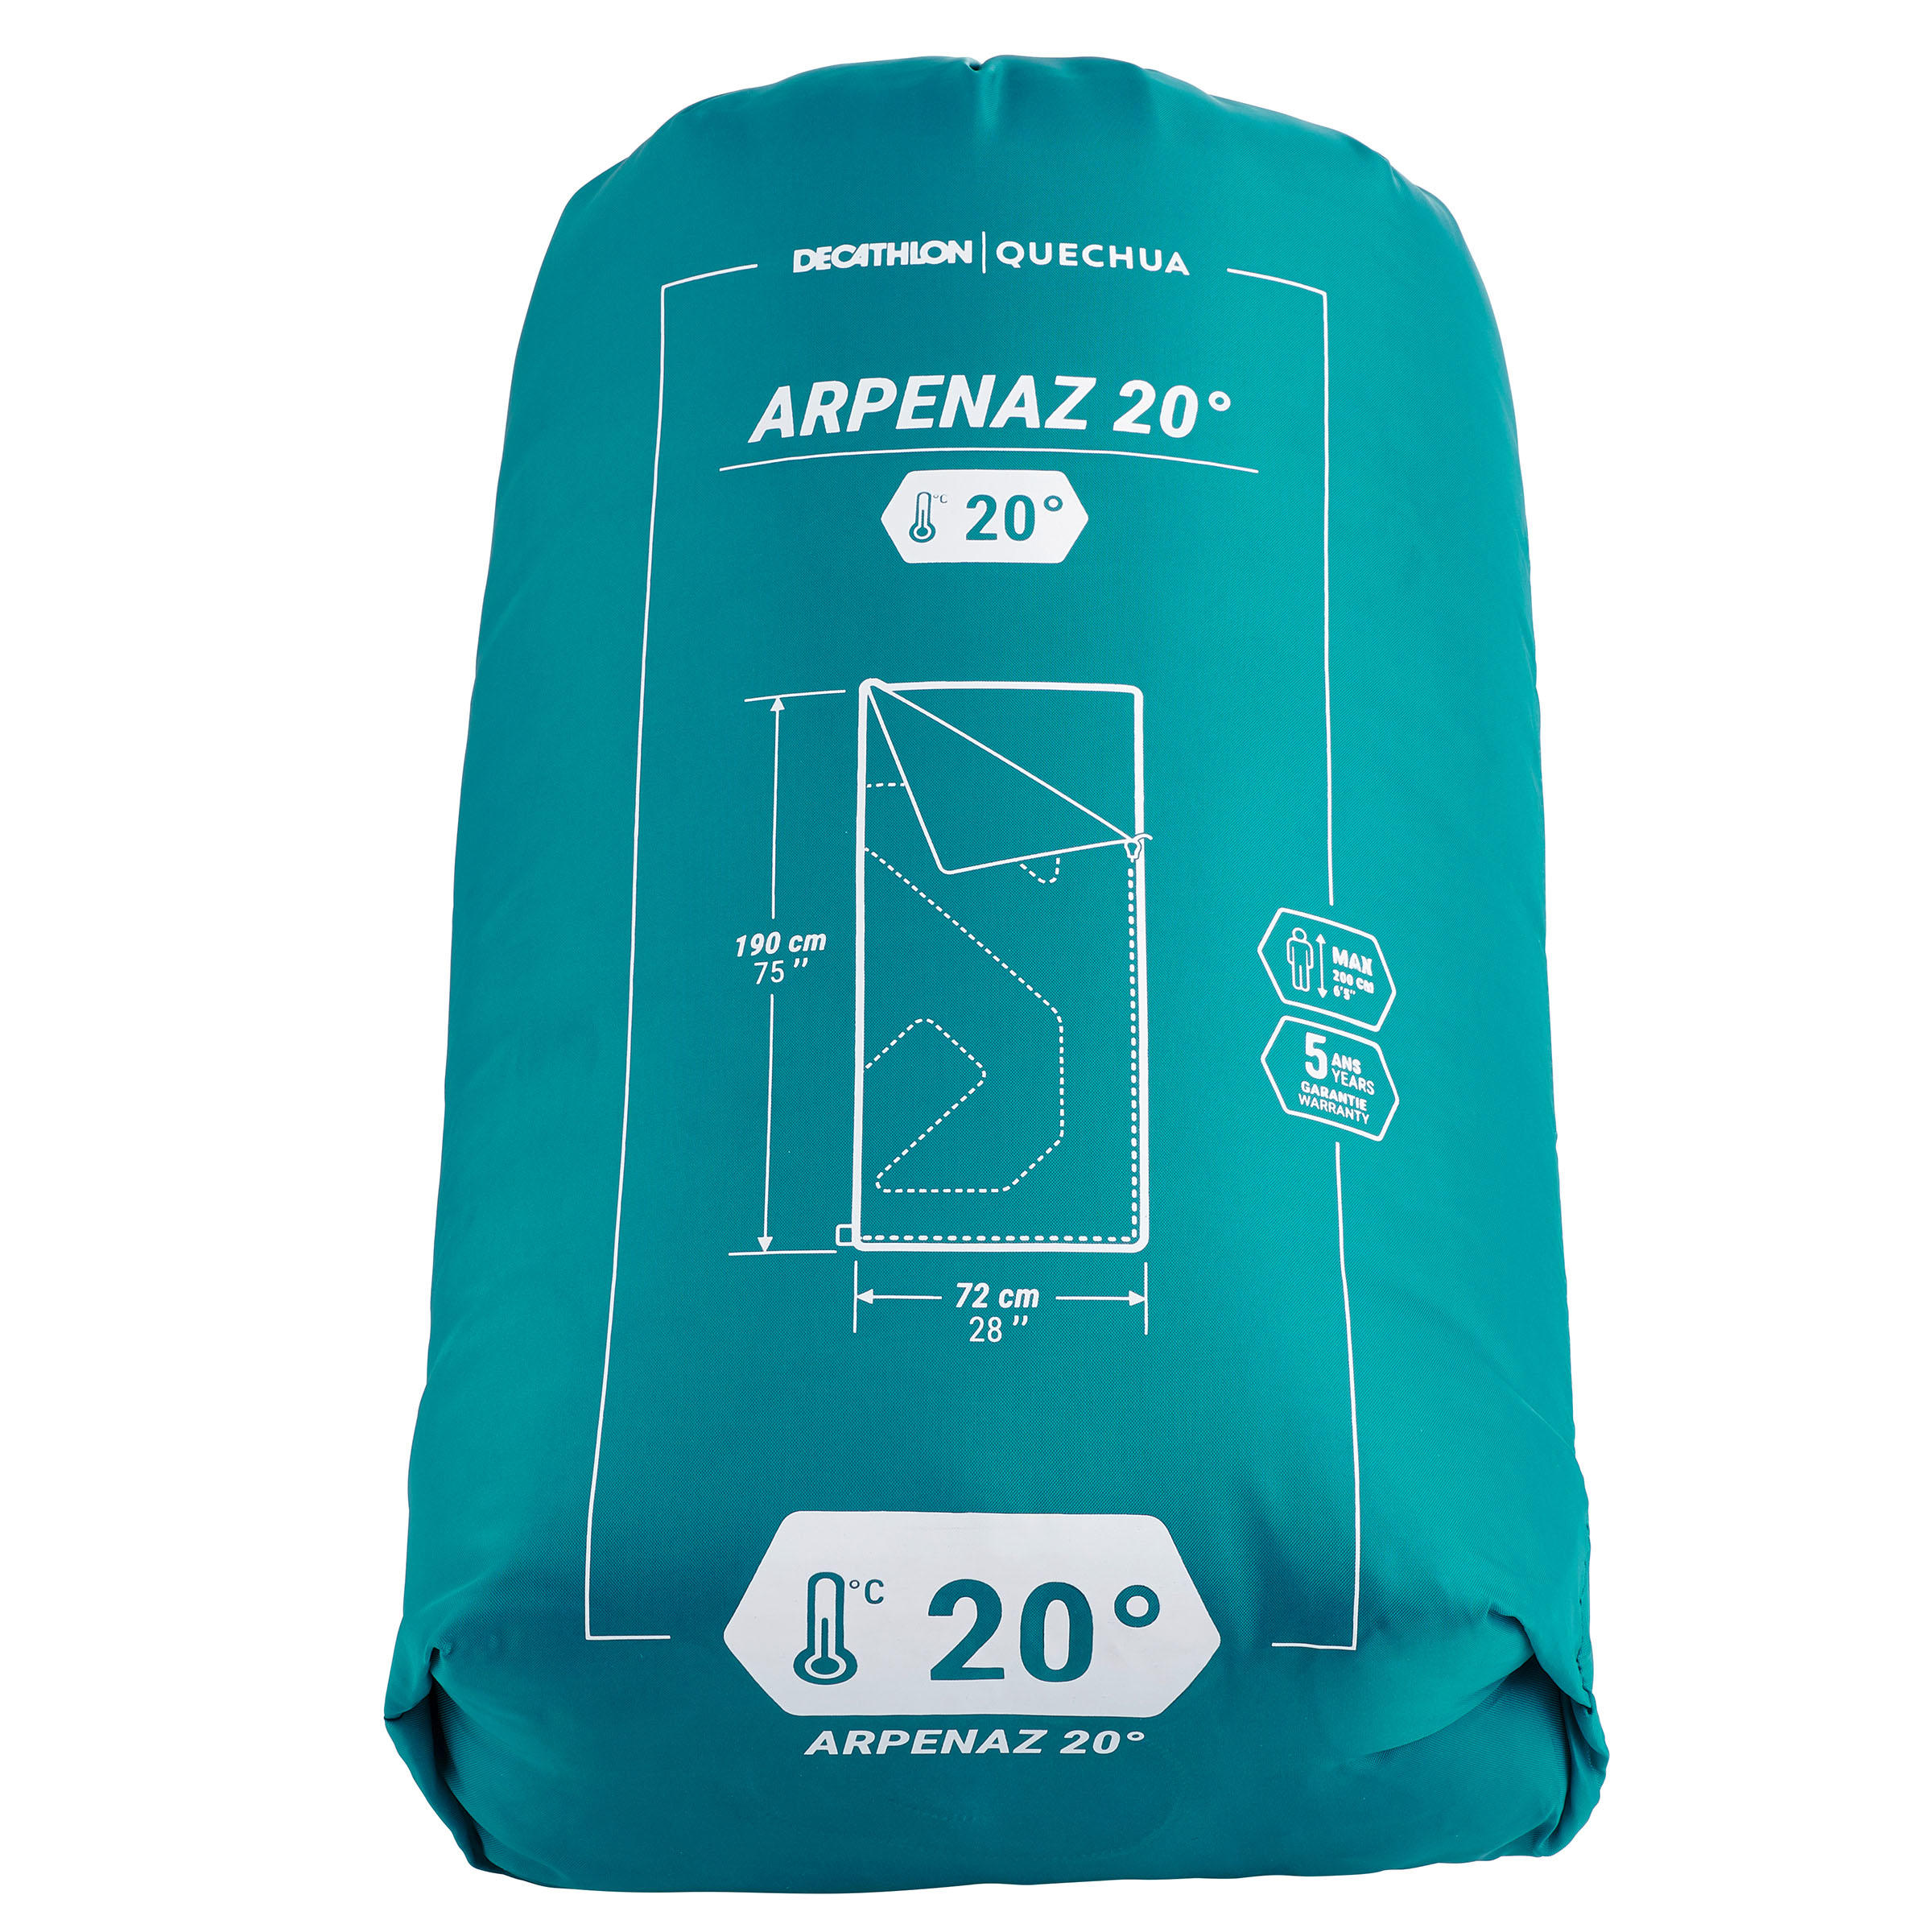 CAMPING SLEEPING BAG - ARPENAZ 20°